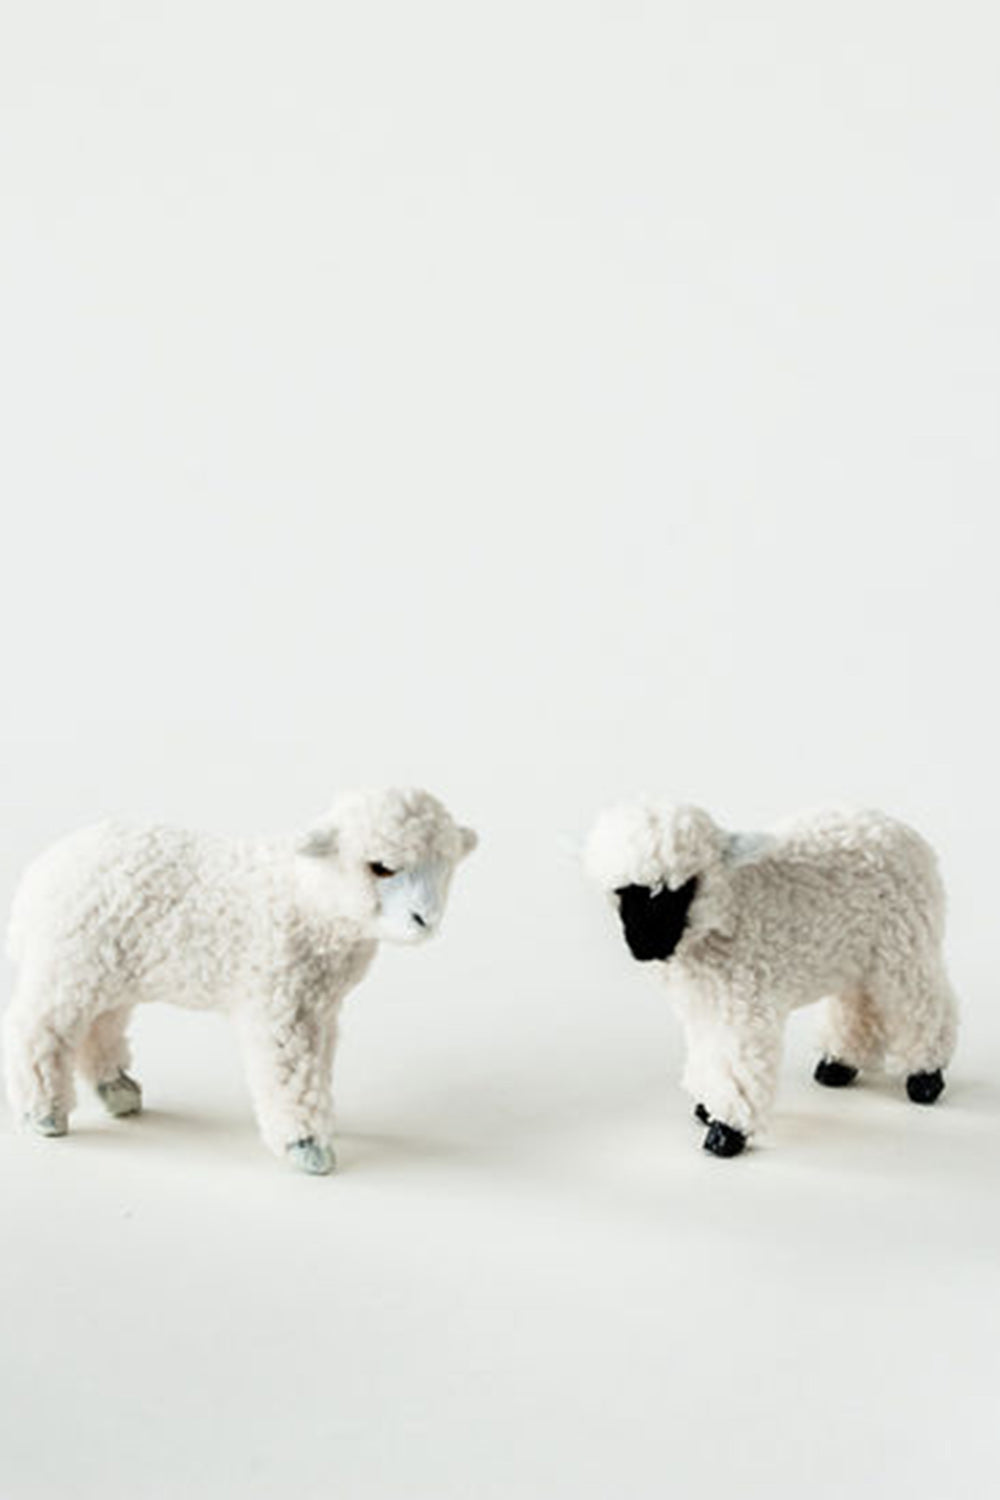 Little Baby Sheep Tabletop Figures